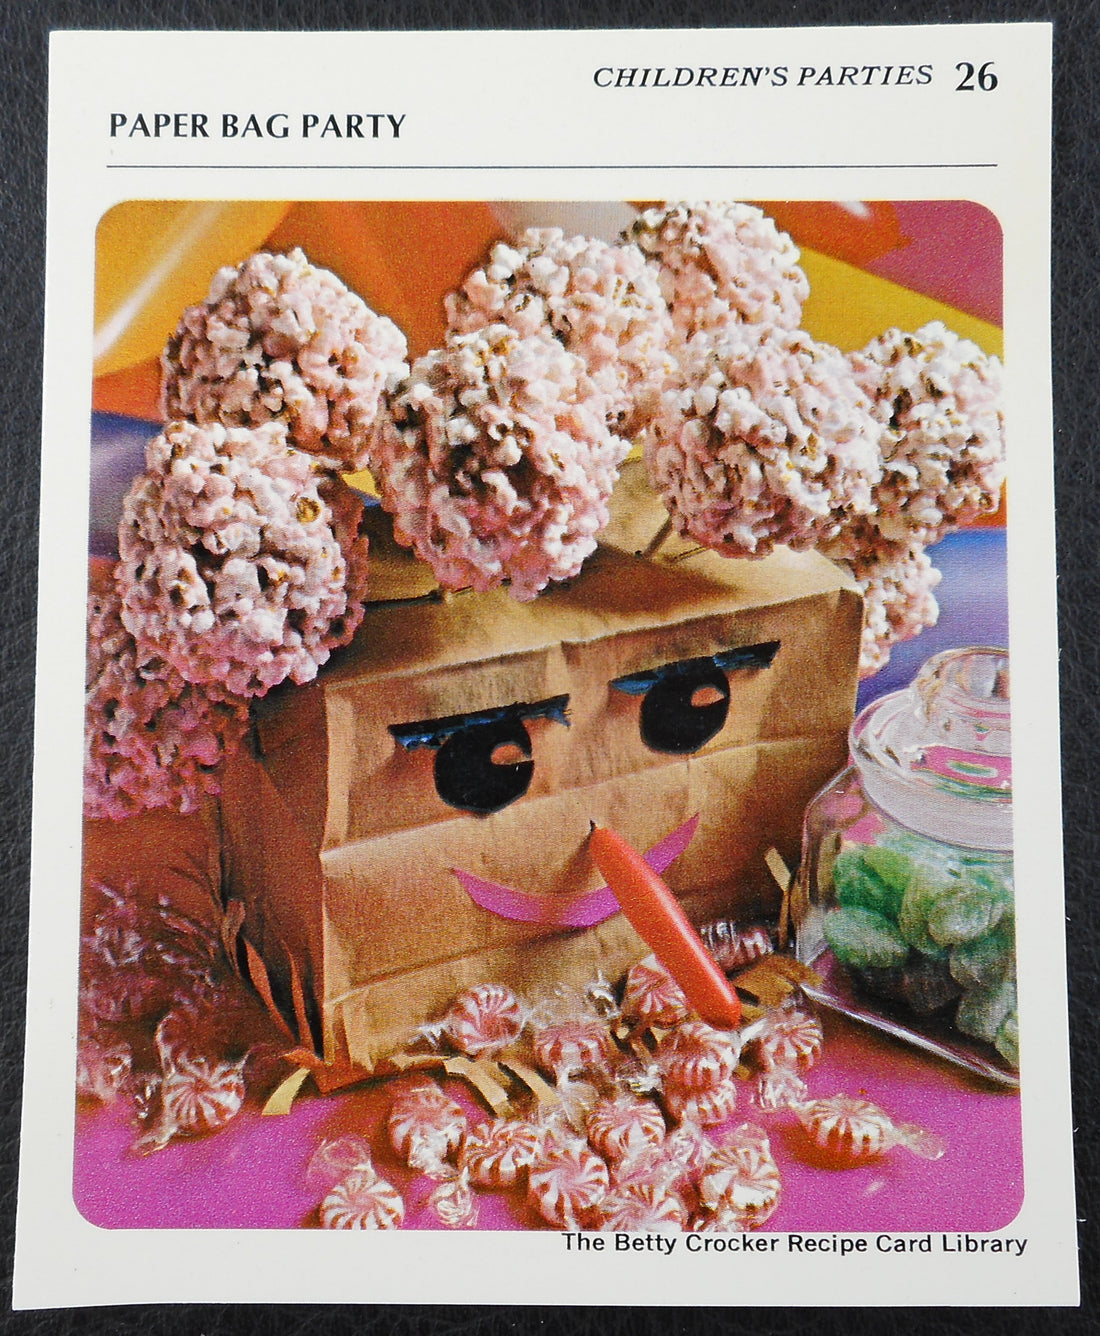 1971 Betty Crocker Recipe Card - Children's Paper Bag Party Popcorn Balls